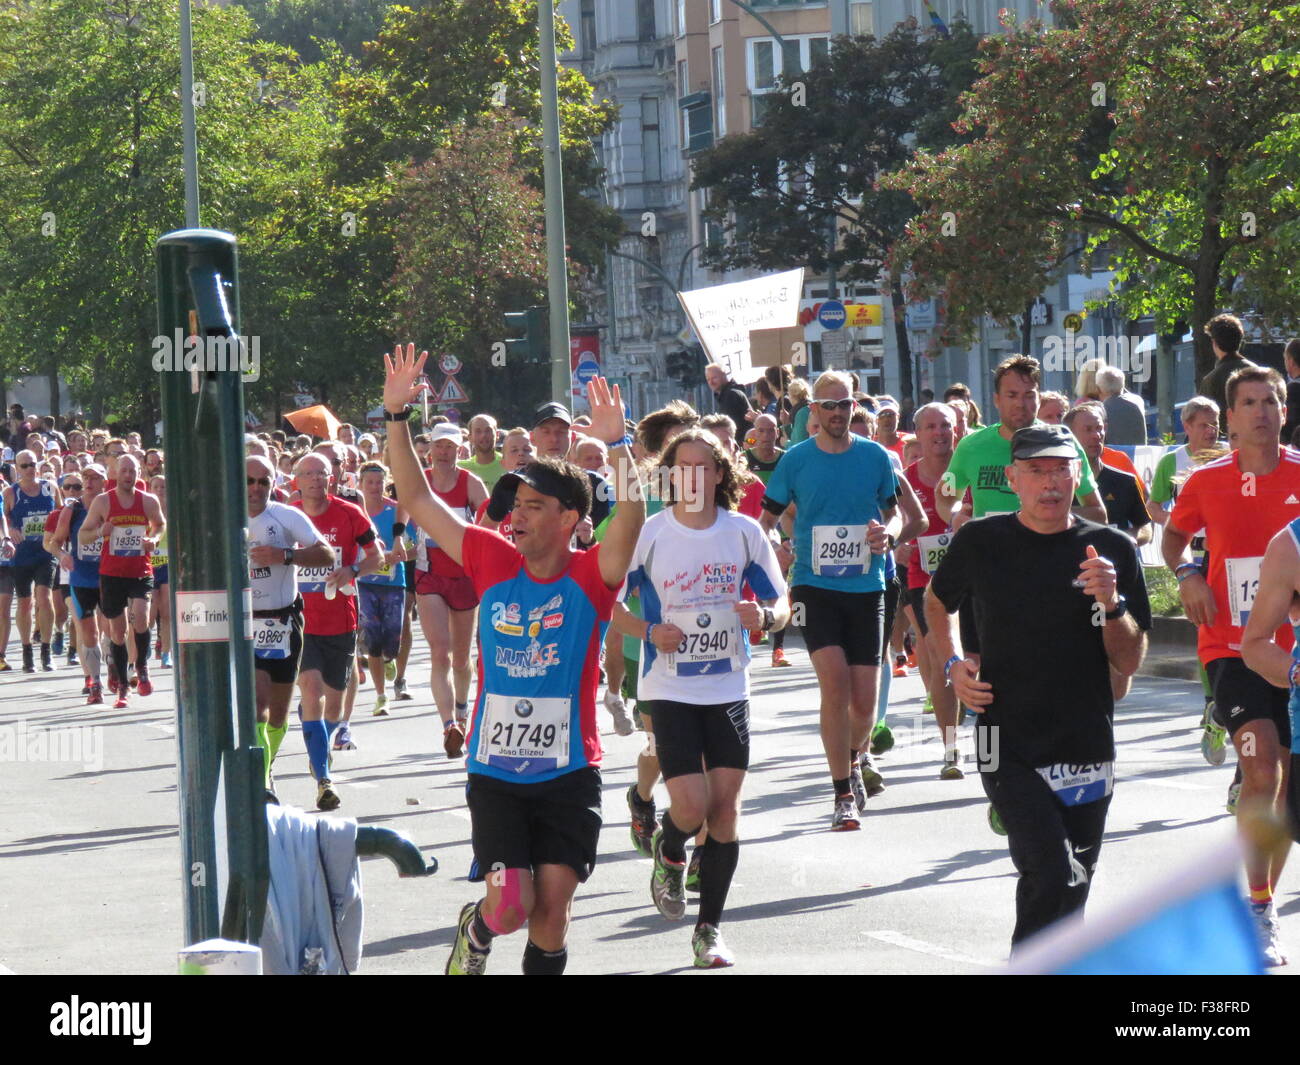 https://c8.alamy.com/comp/F38FRD/berlin-marathon-2015-20150928-thousands-of-athletes-running-F38FRD.jpg
